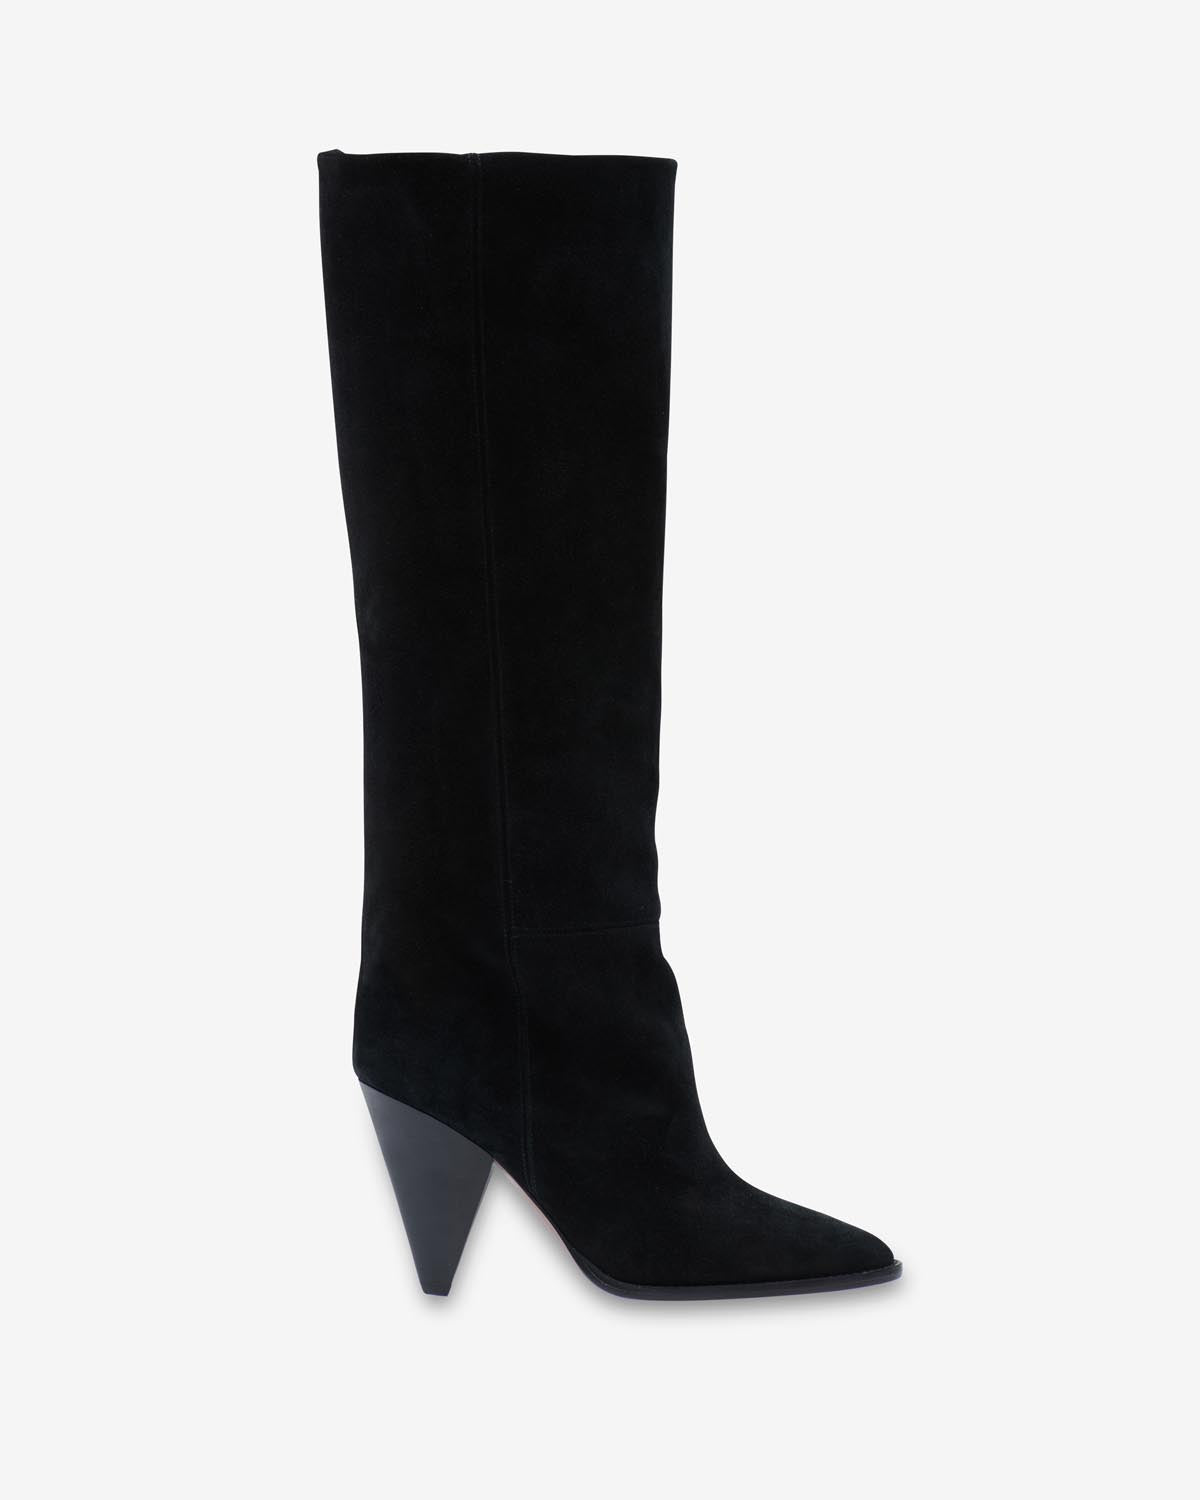 Ririo boots Woman Black 11